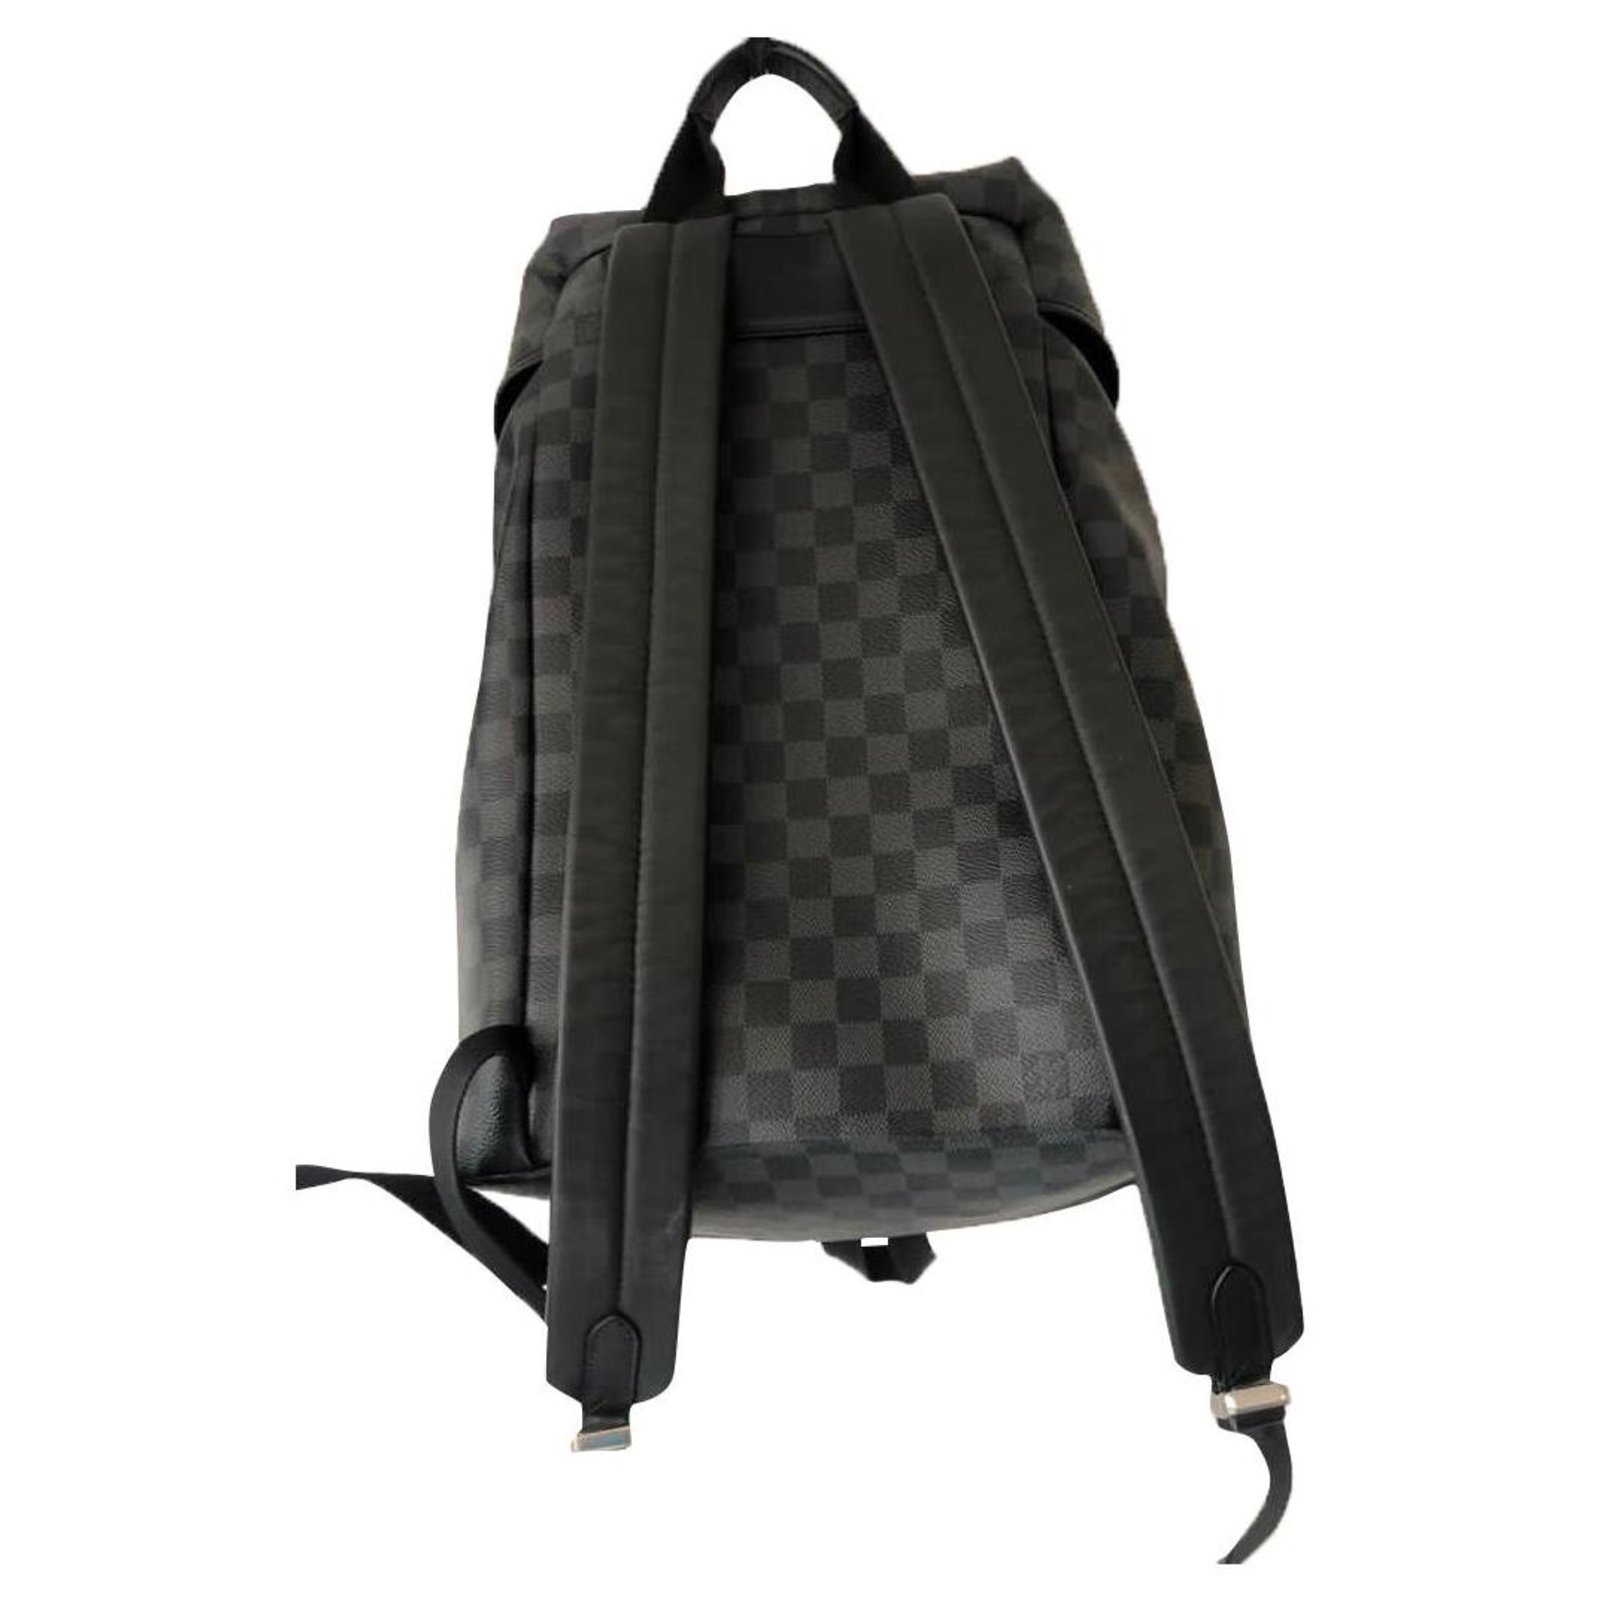 Louis Vuitton Damier Graphite Zack Backpack